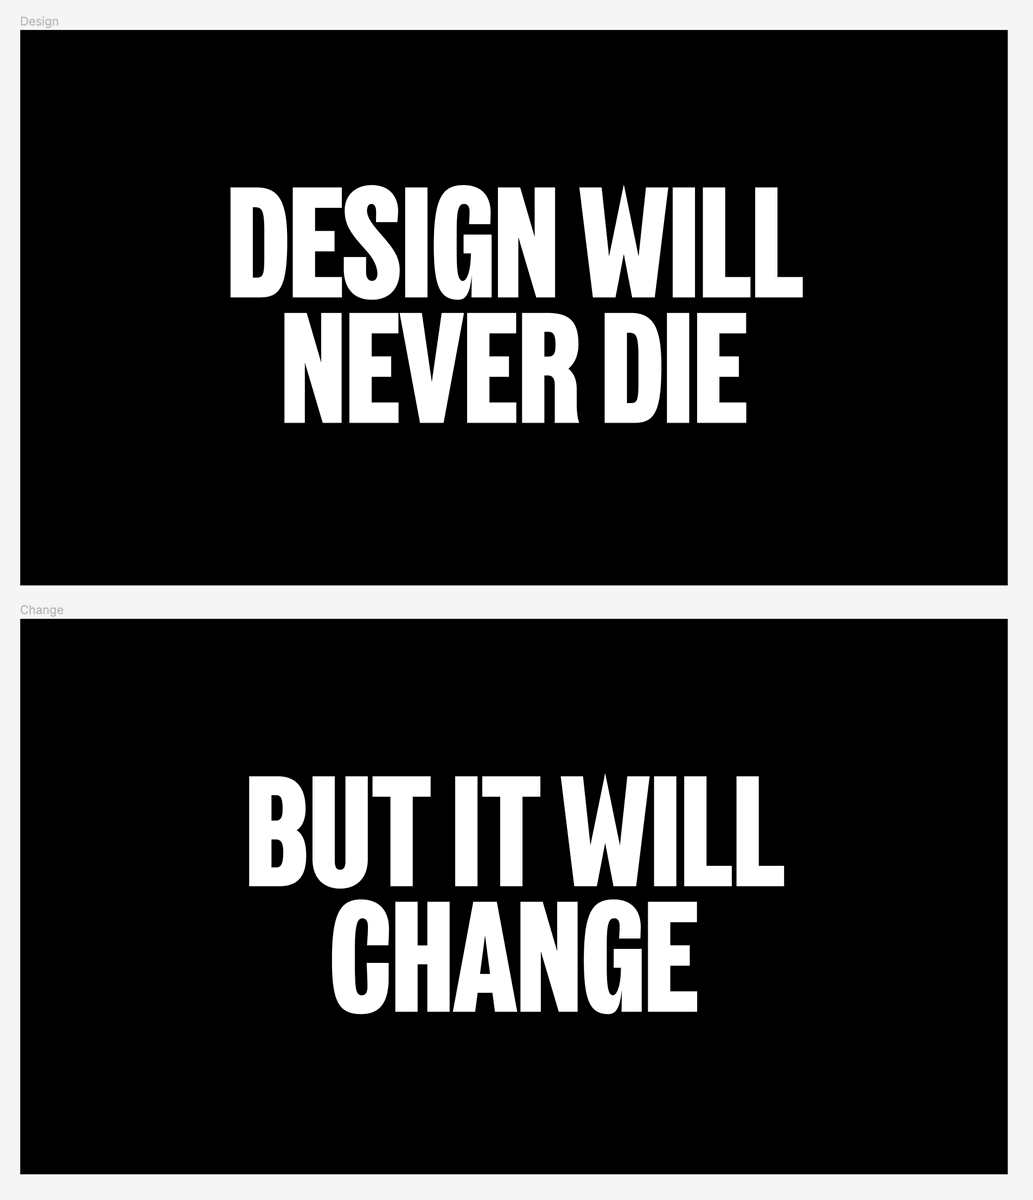 Design is dead, long live design.